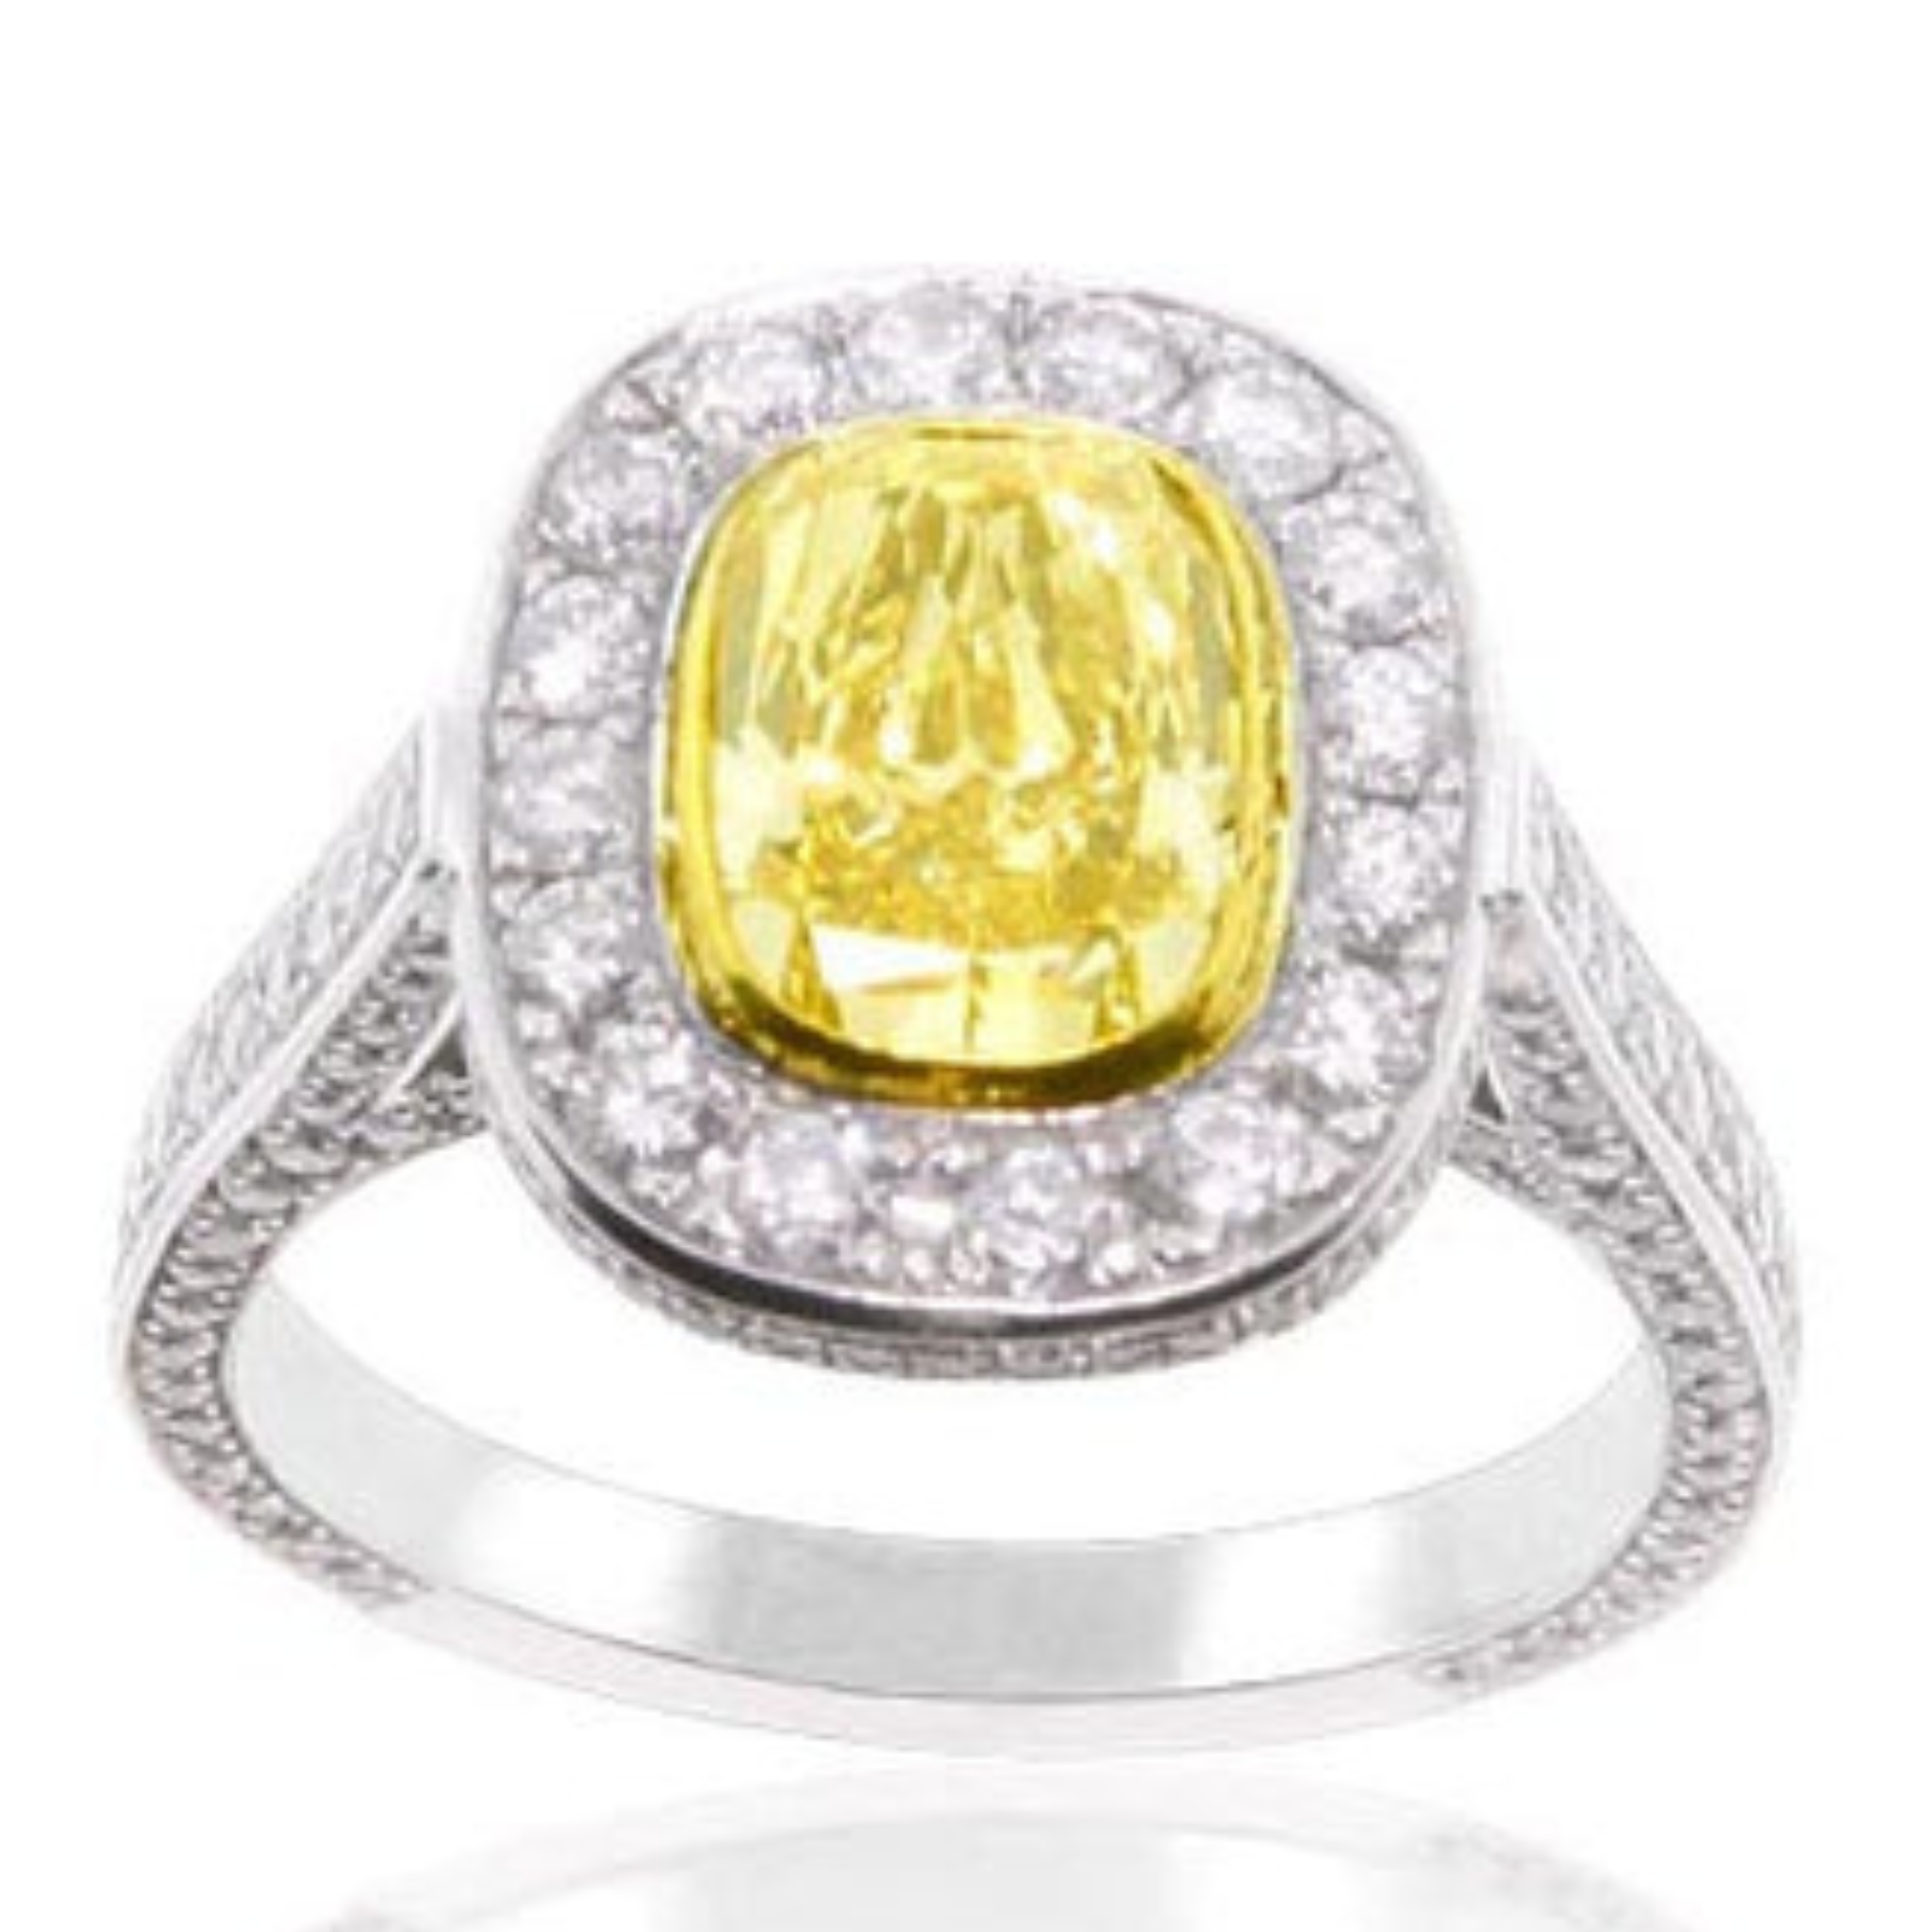 1.67cts Fancy Yellow Diamond Halo Ring.jpg